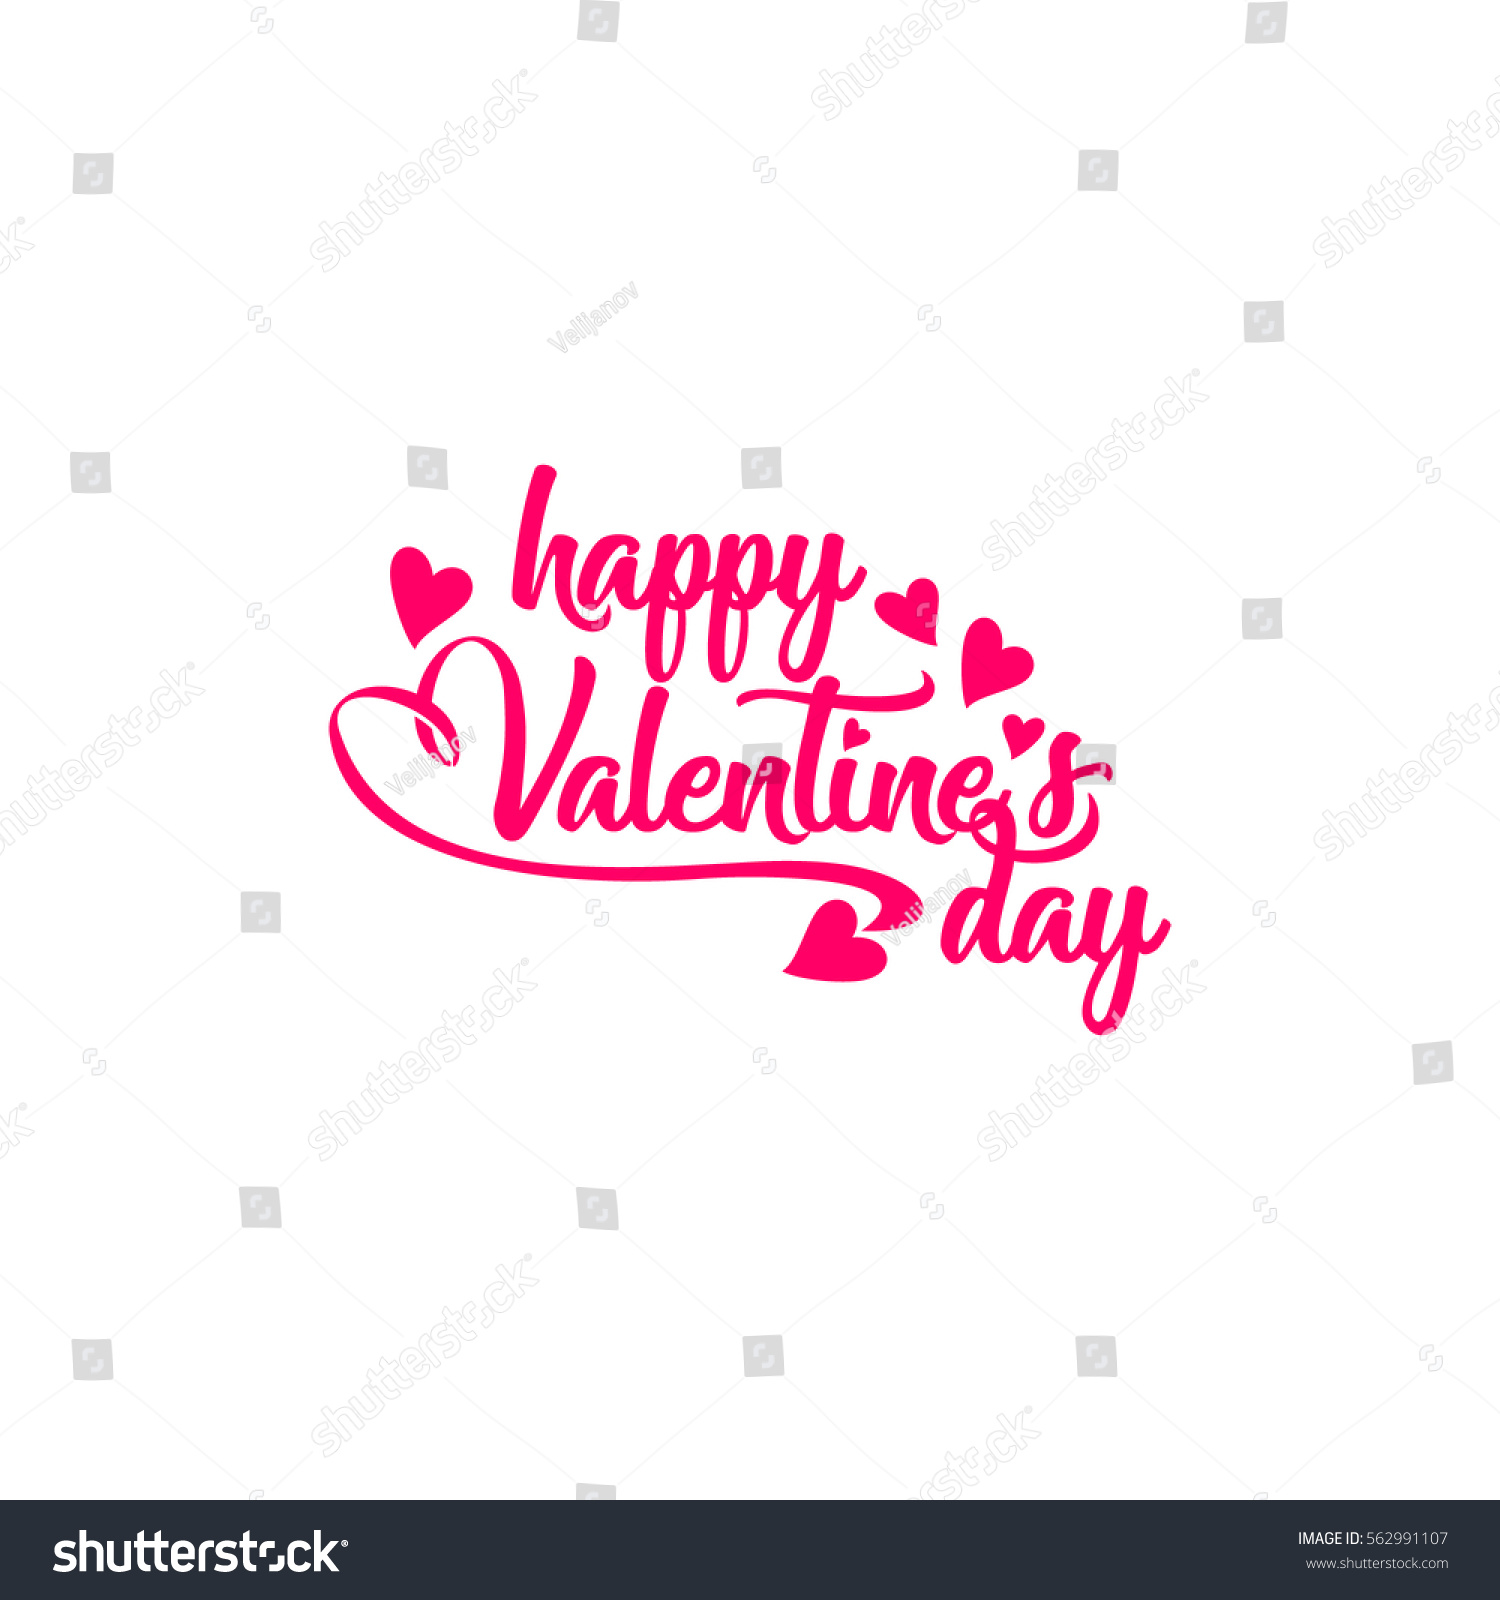 Happy Valentine's day vector element #562991107